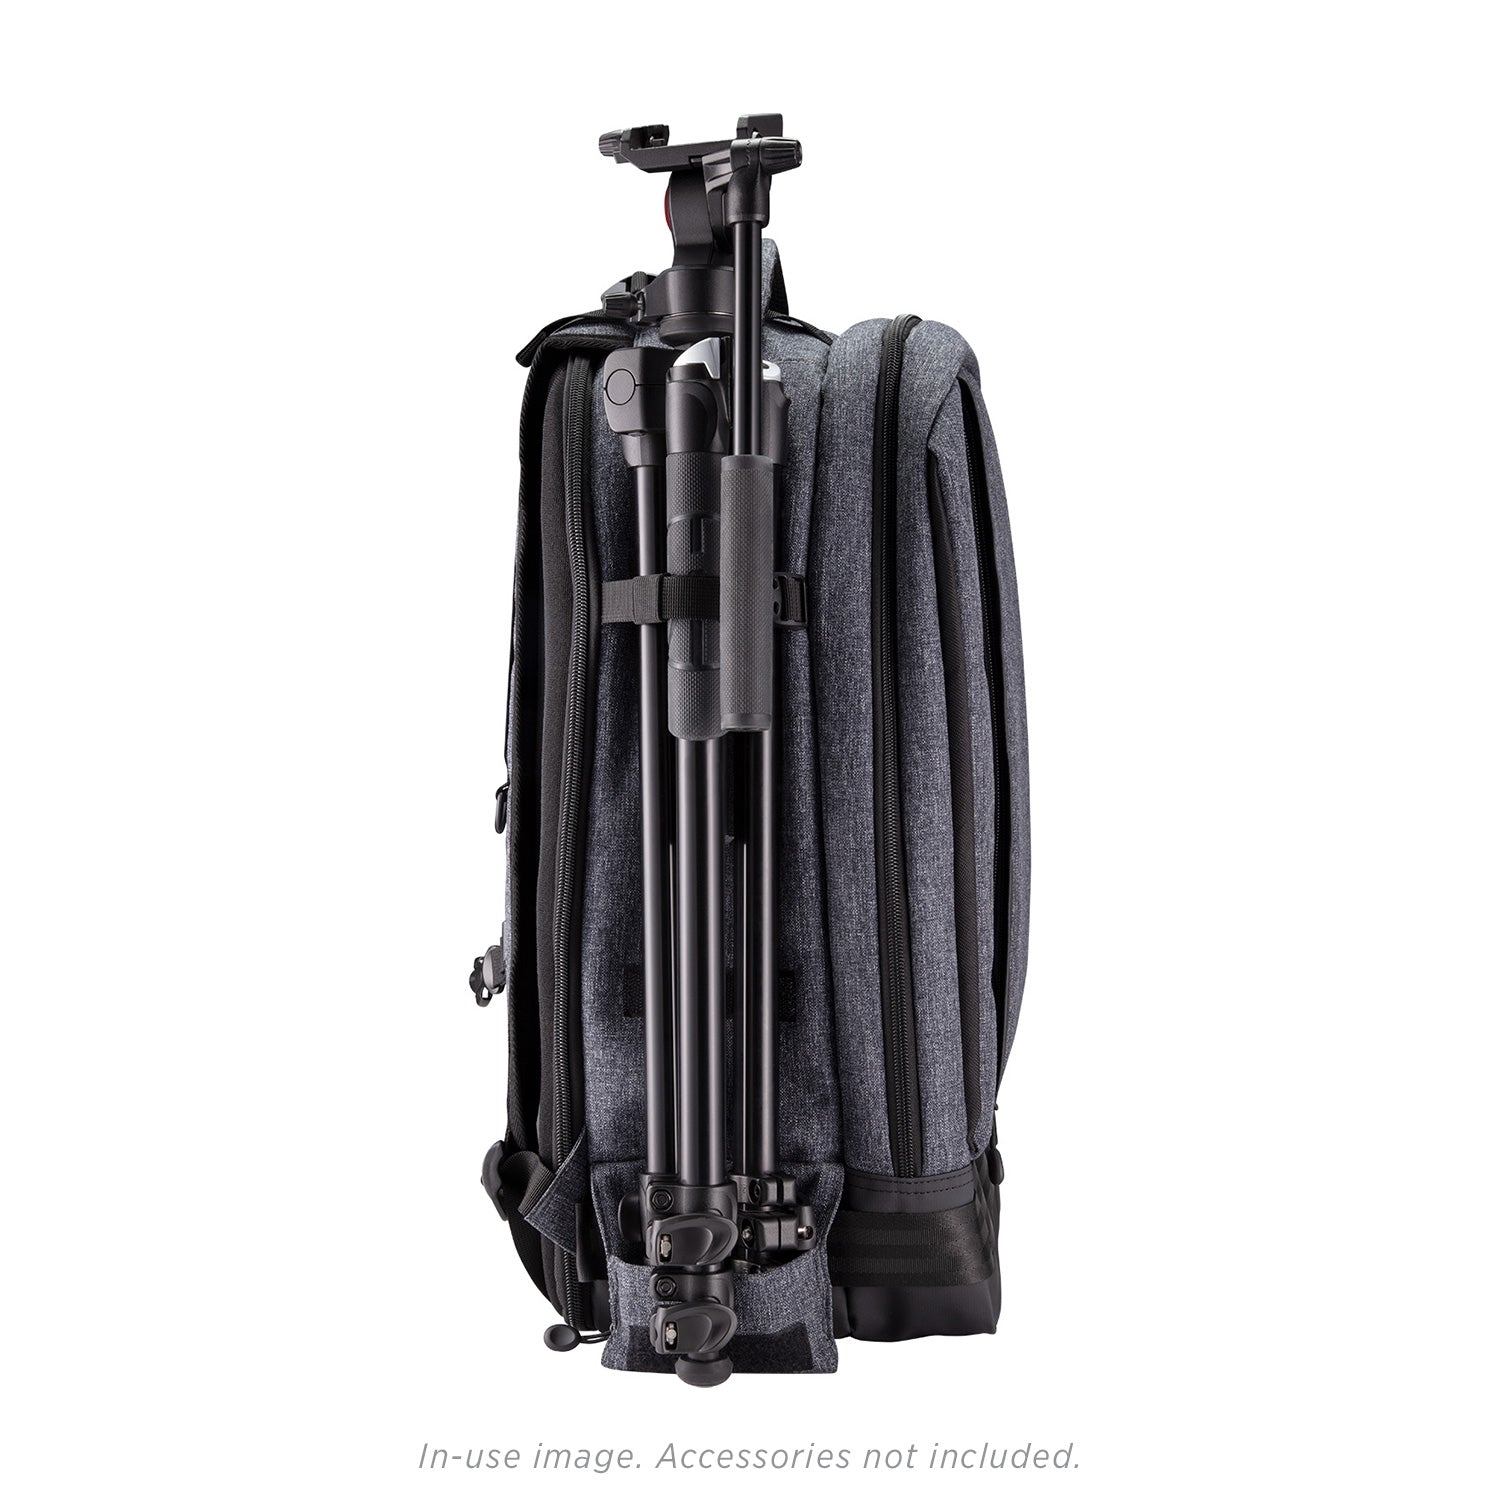 FJ200 Strobe 3-Light Backpack Kit with FJ-X3 M Universal Wireless Trigger